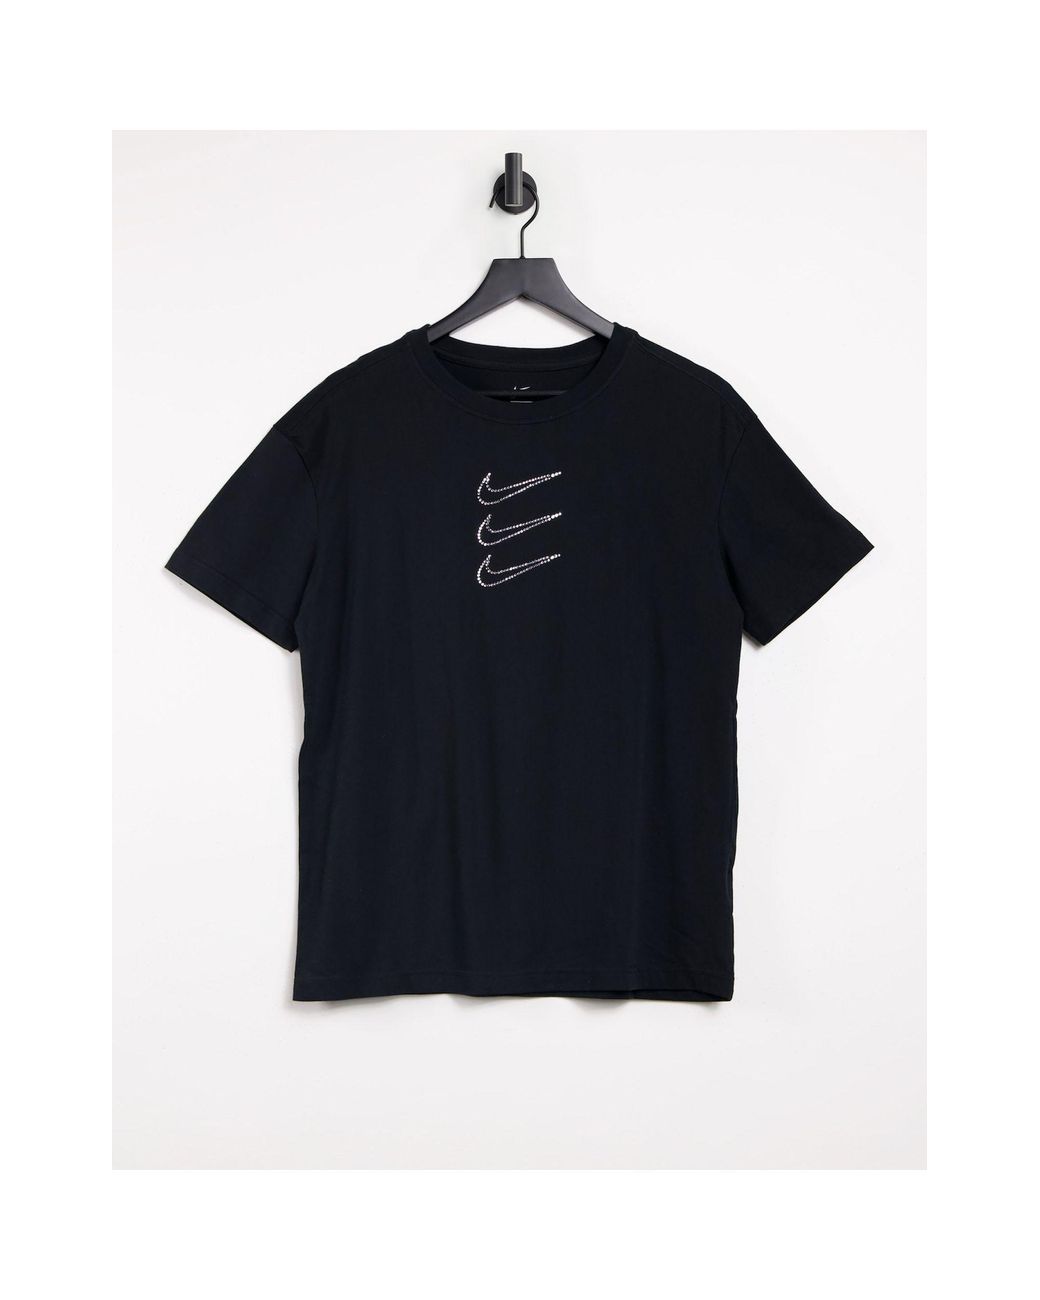 Nike Cotton Rhinestone Triple Swoosh T-shirt in Black | Lyst Australia